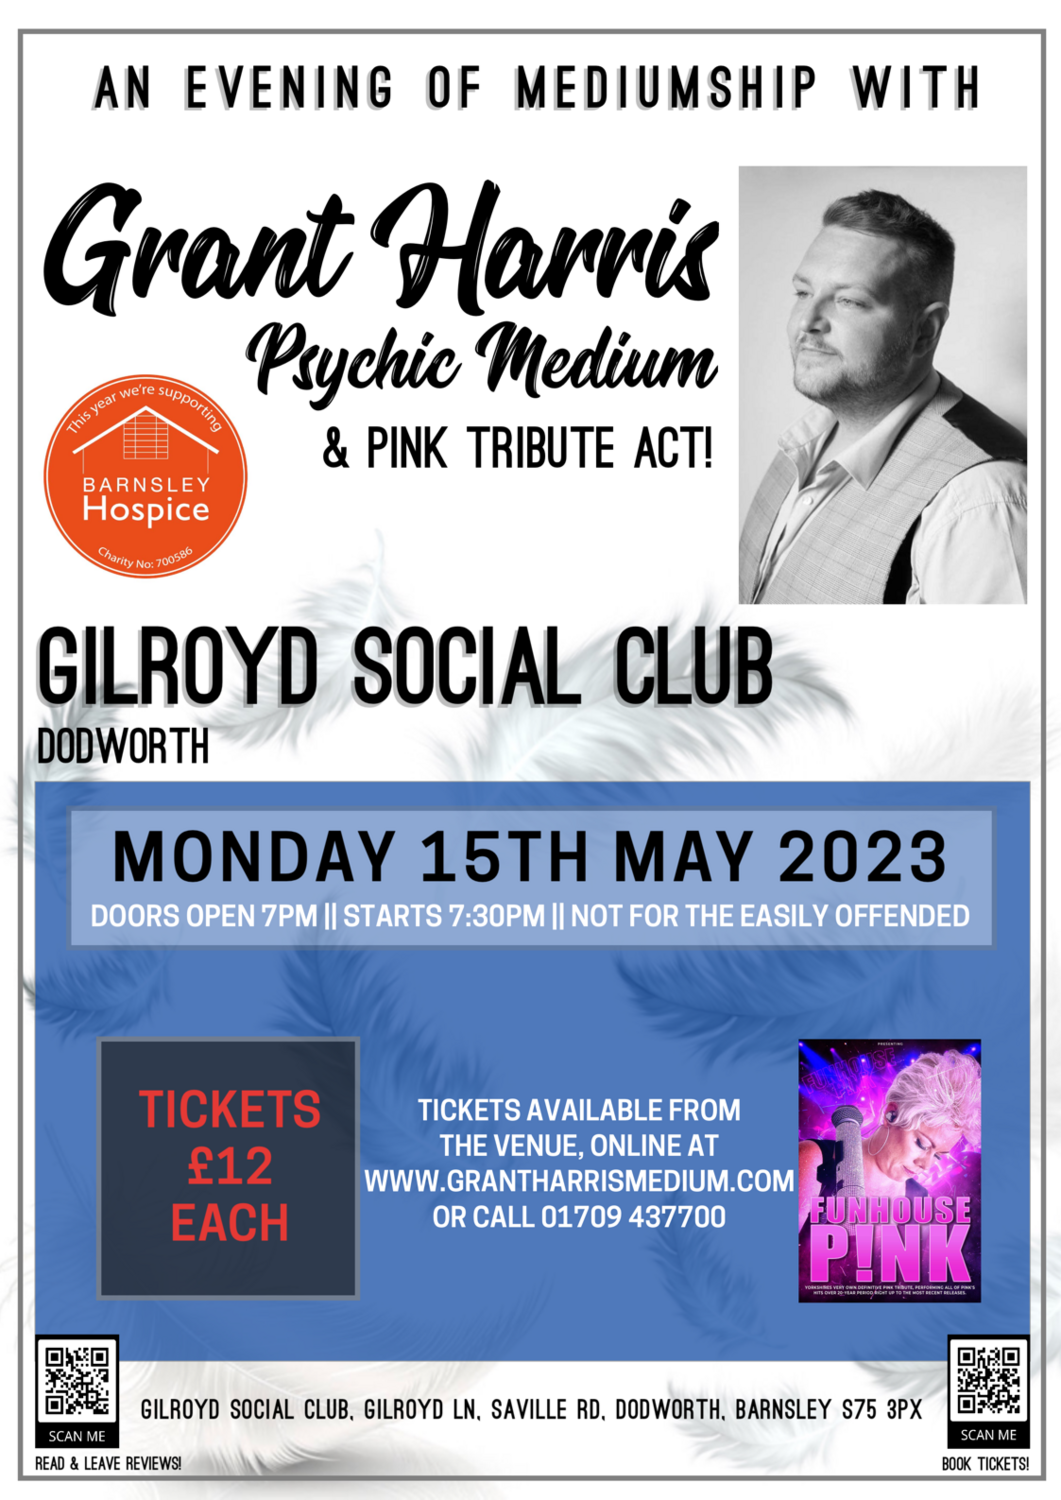 Gilroyd Social Club, Barnsley - Barnsley Hospice Fundraiser, Monday 15th May 2023 + Pink Tribute Act!!!